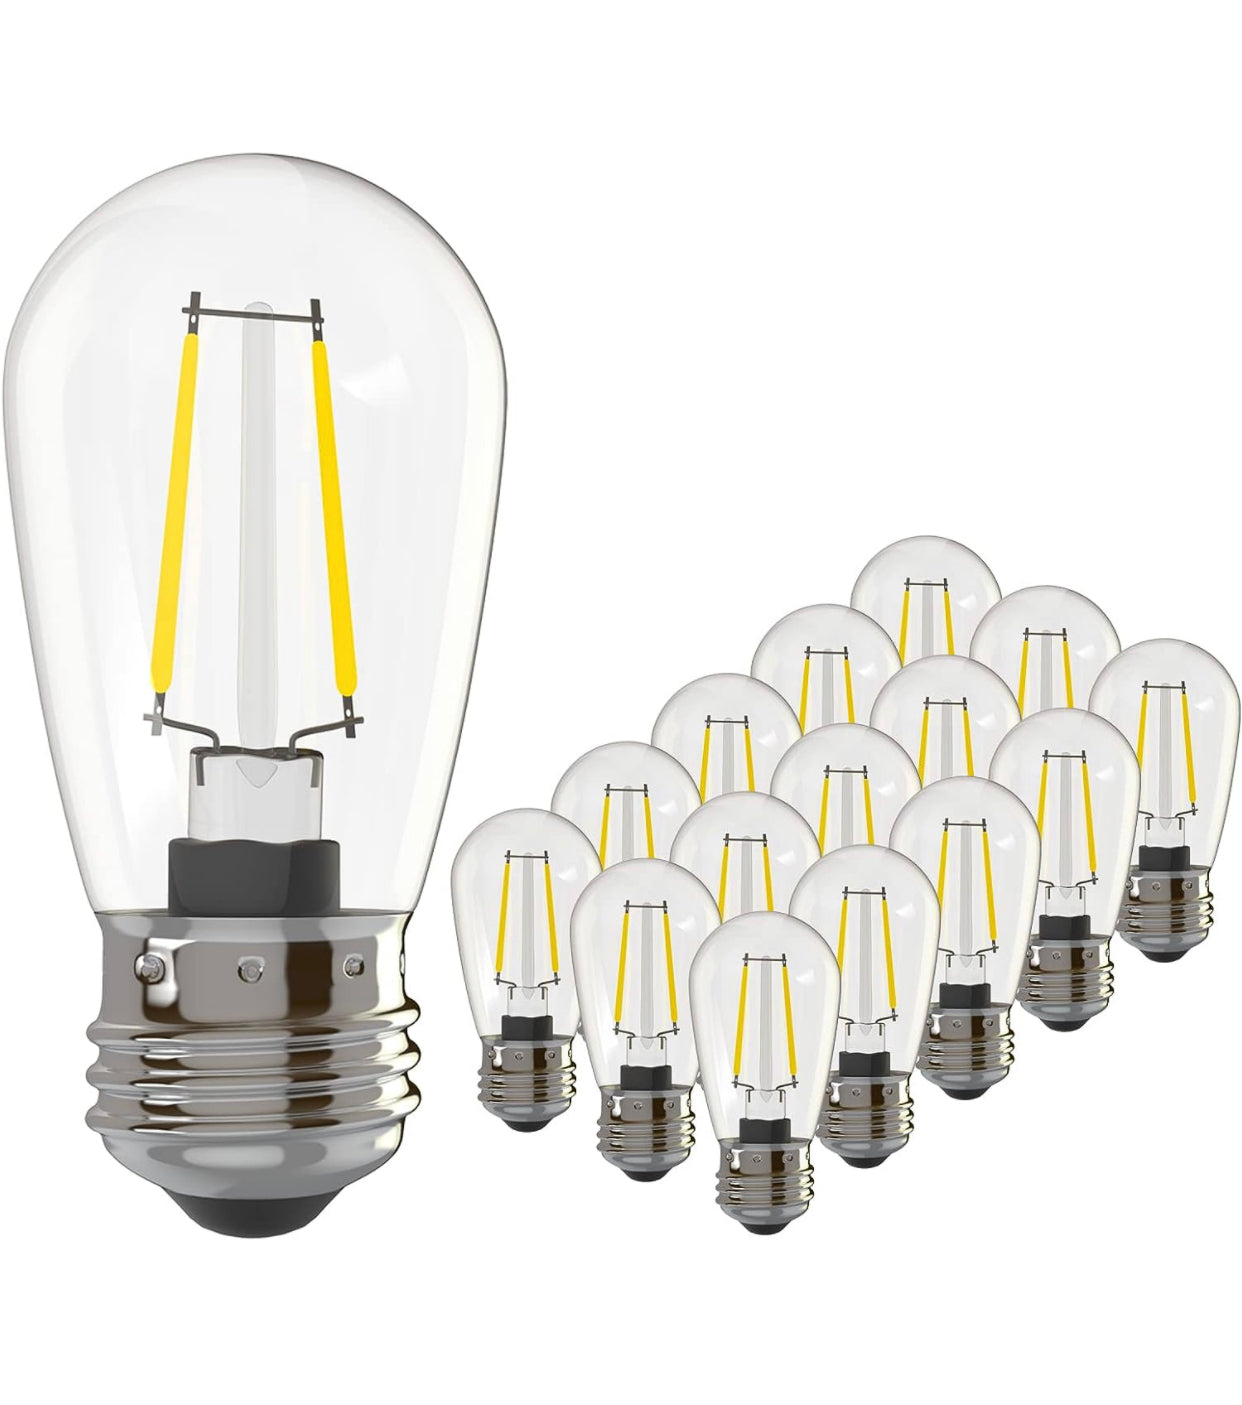 Replacement Bulb PRO LED Energy Efficient 2 Watt Warm White 2500K Dimmable Bulb - 15 Pack - E26 Base